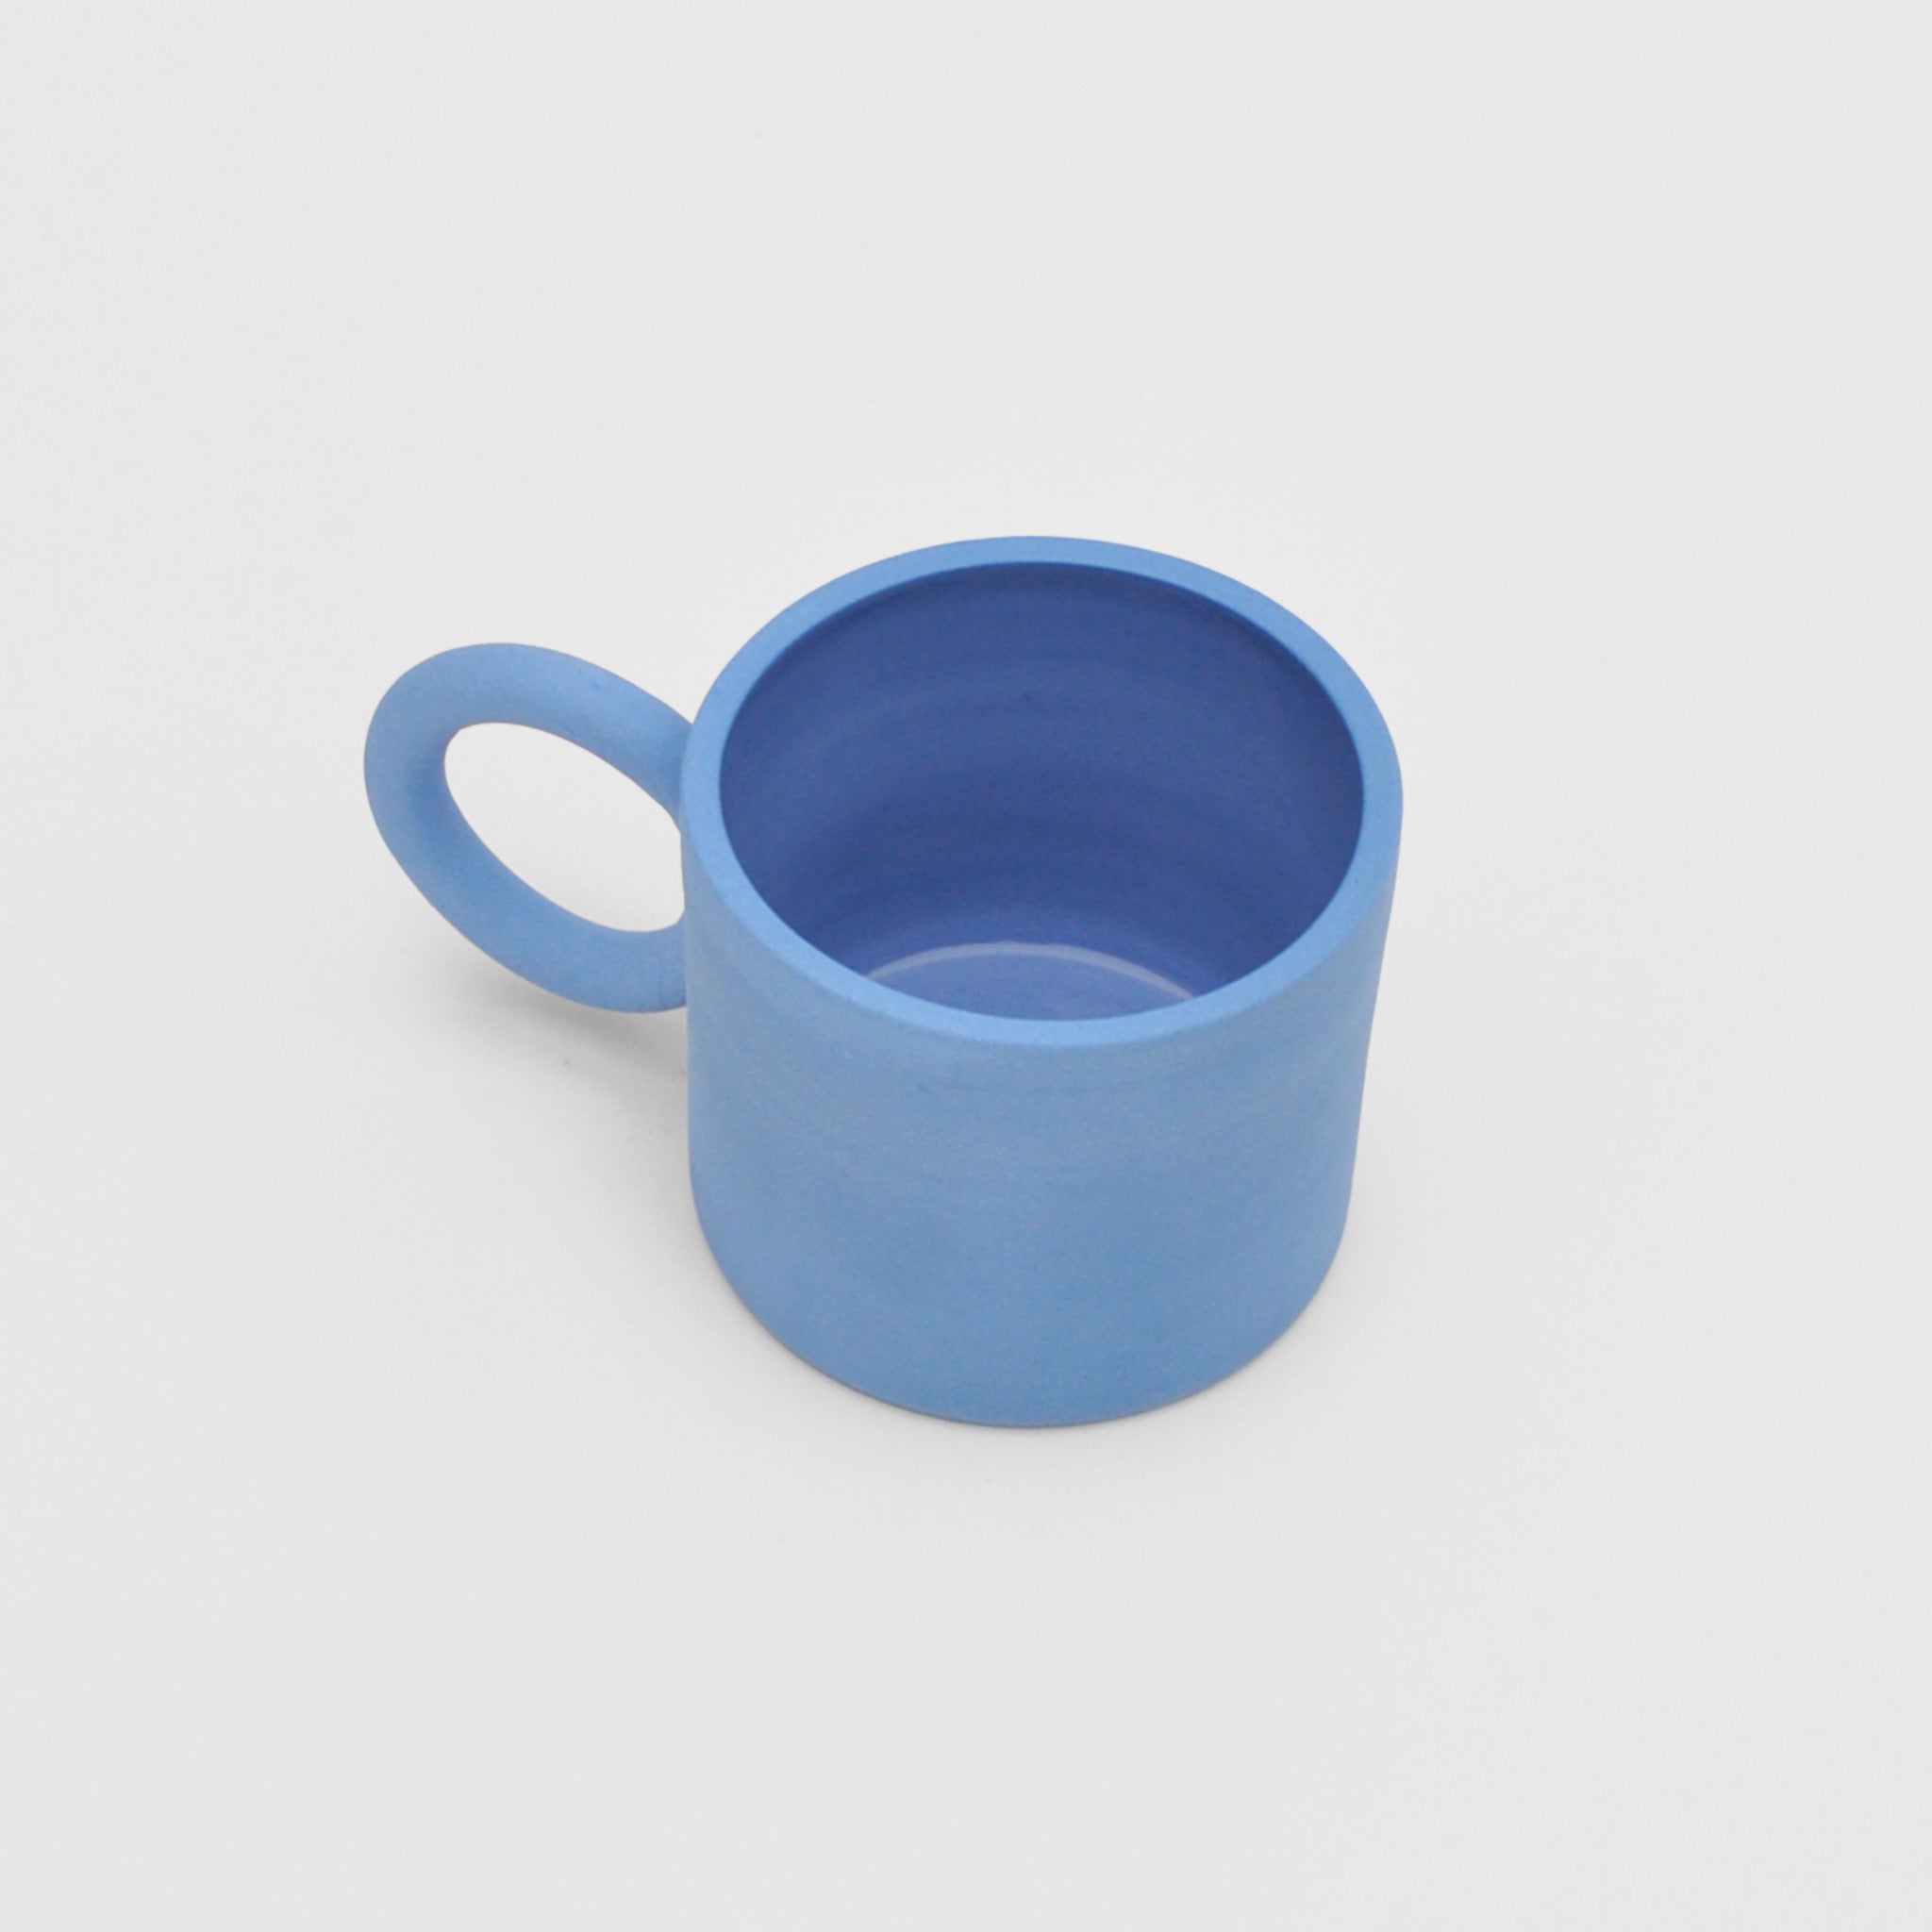 Above image of the circle mug in blue by Ekua Ceramics.